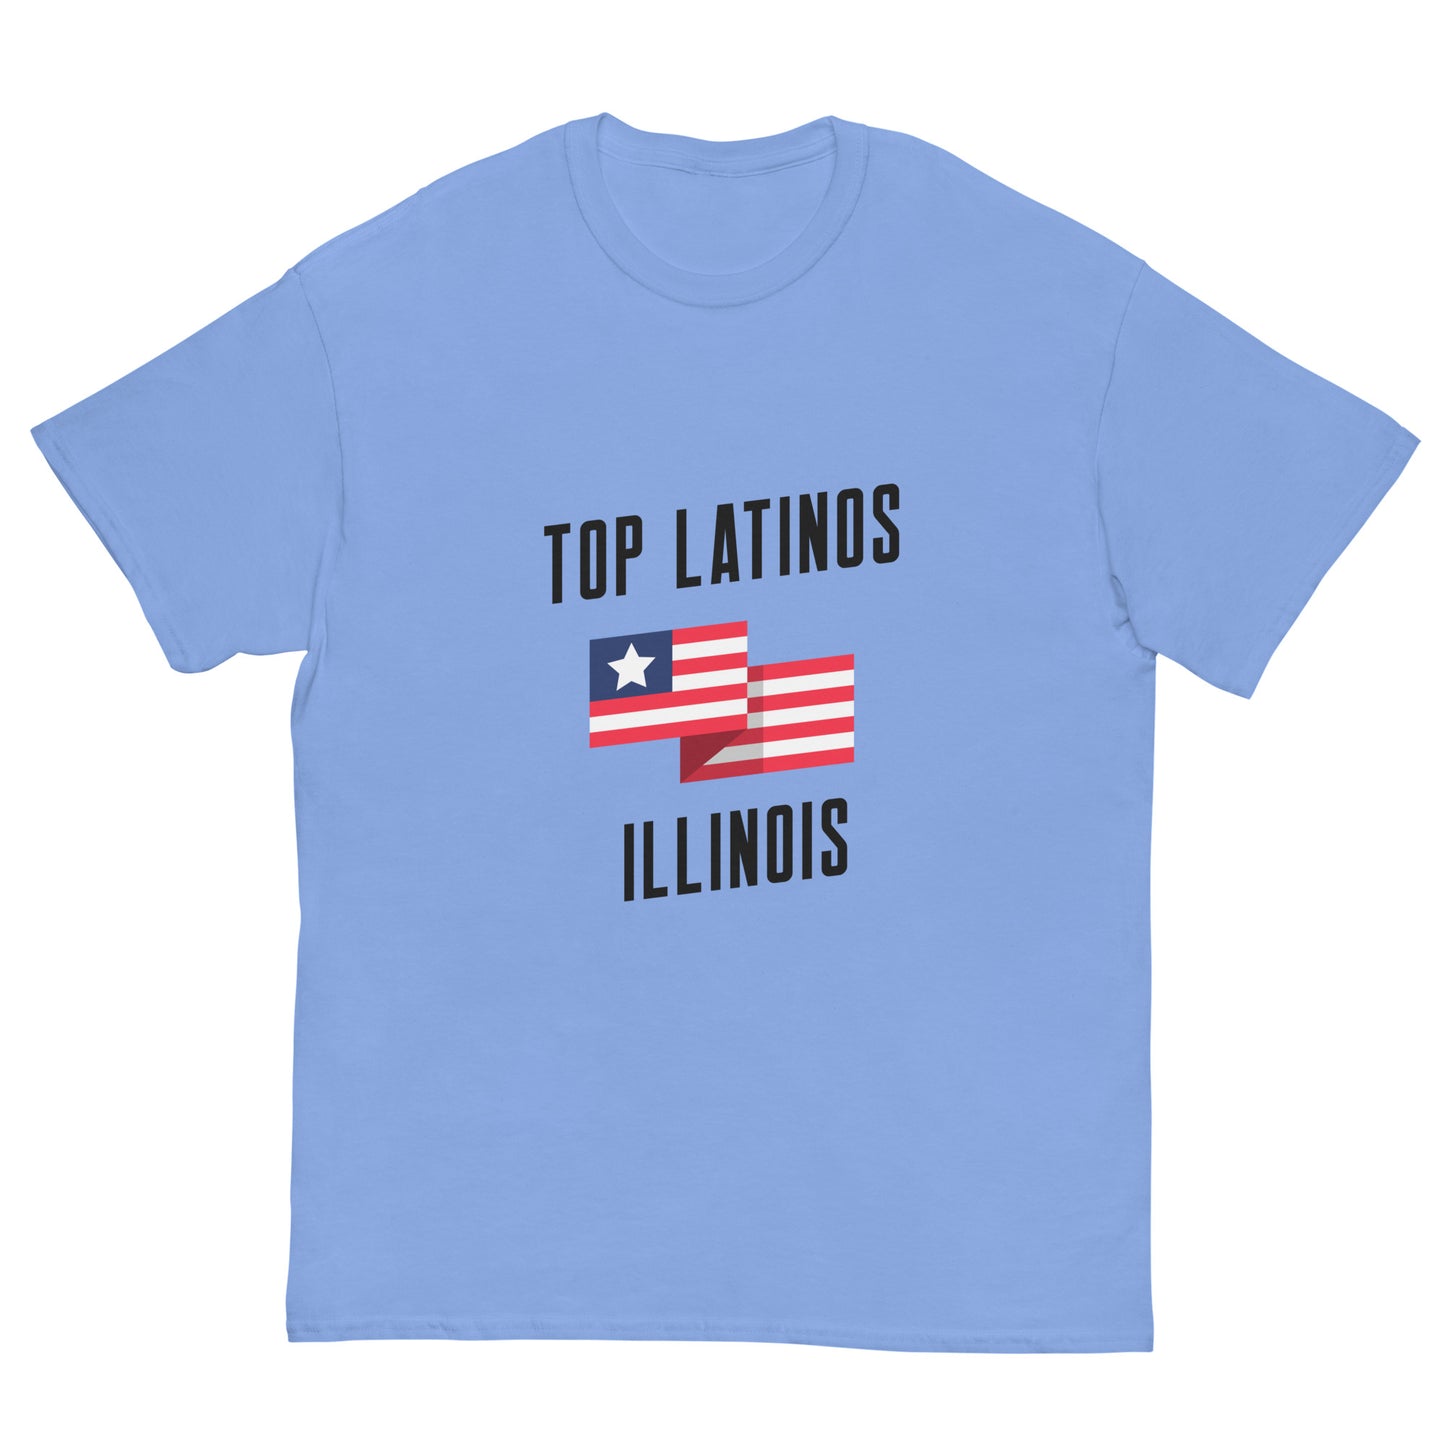 Top Latinos Illinois classic tee